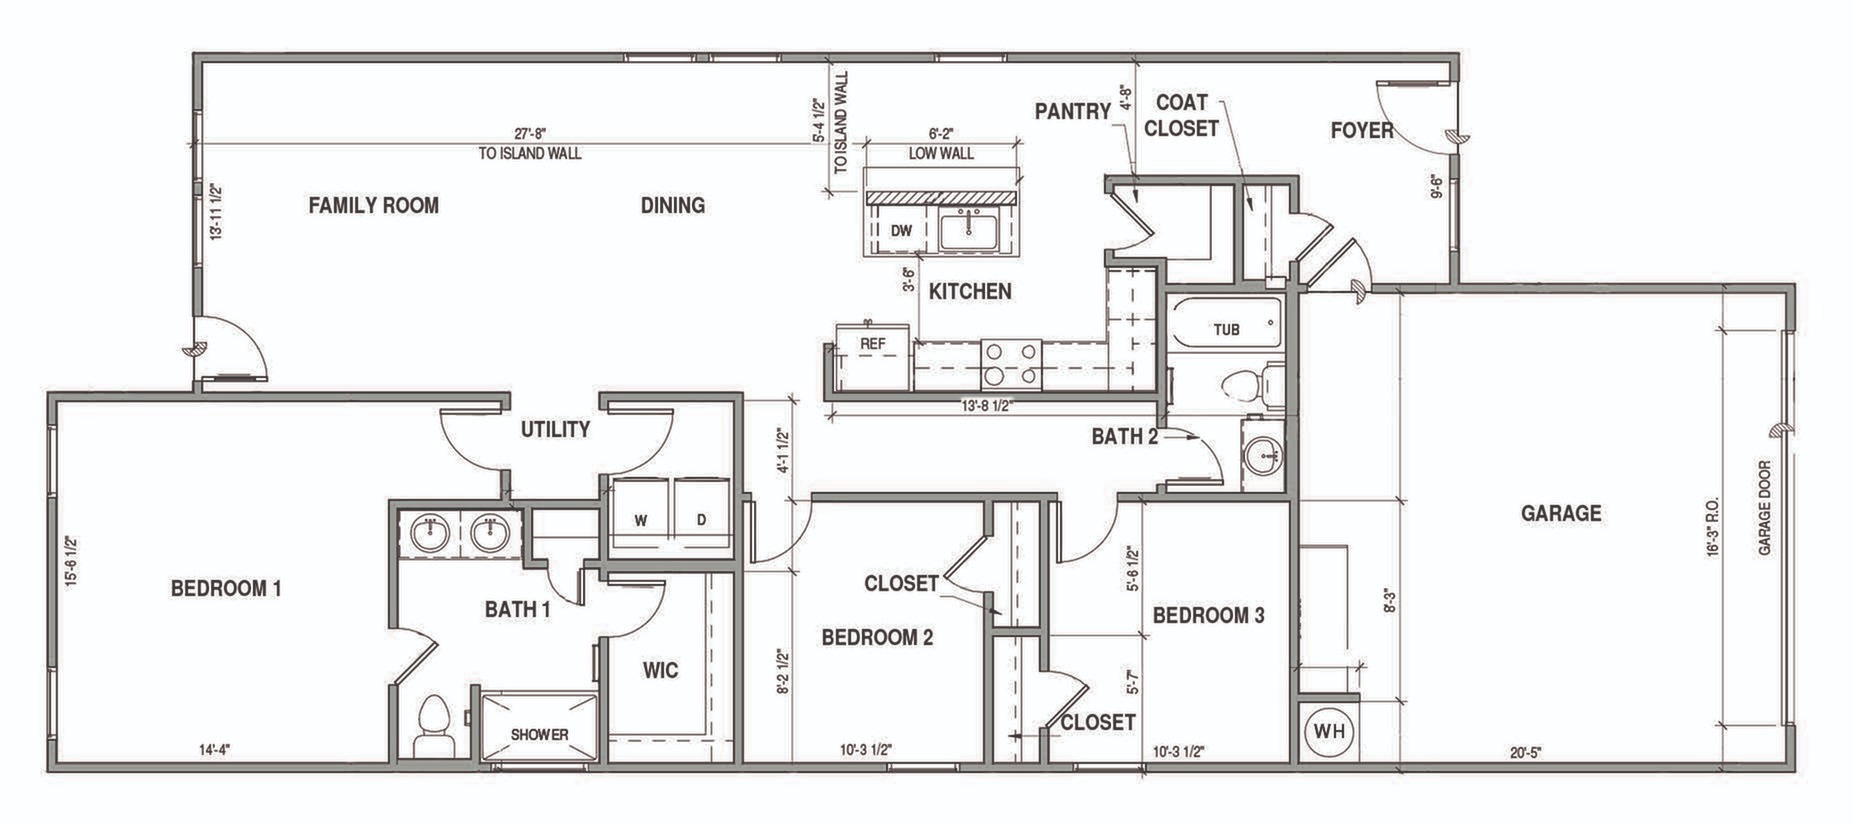 HH Floorplan | Cavalry Family Housing |